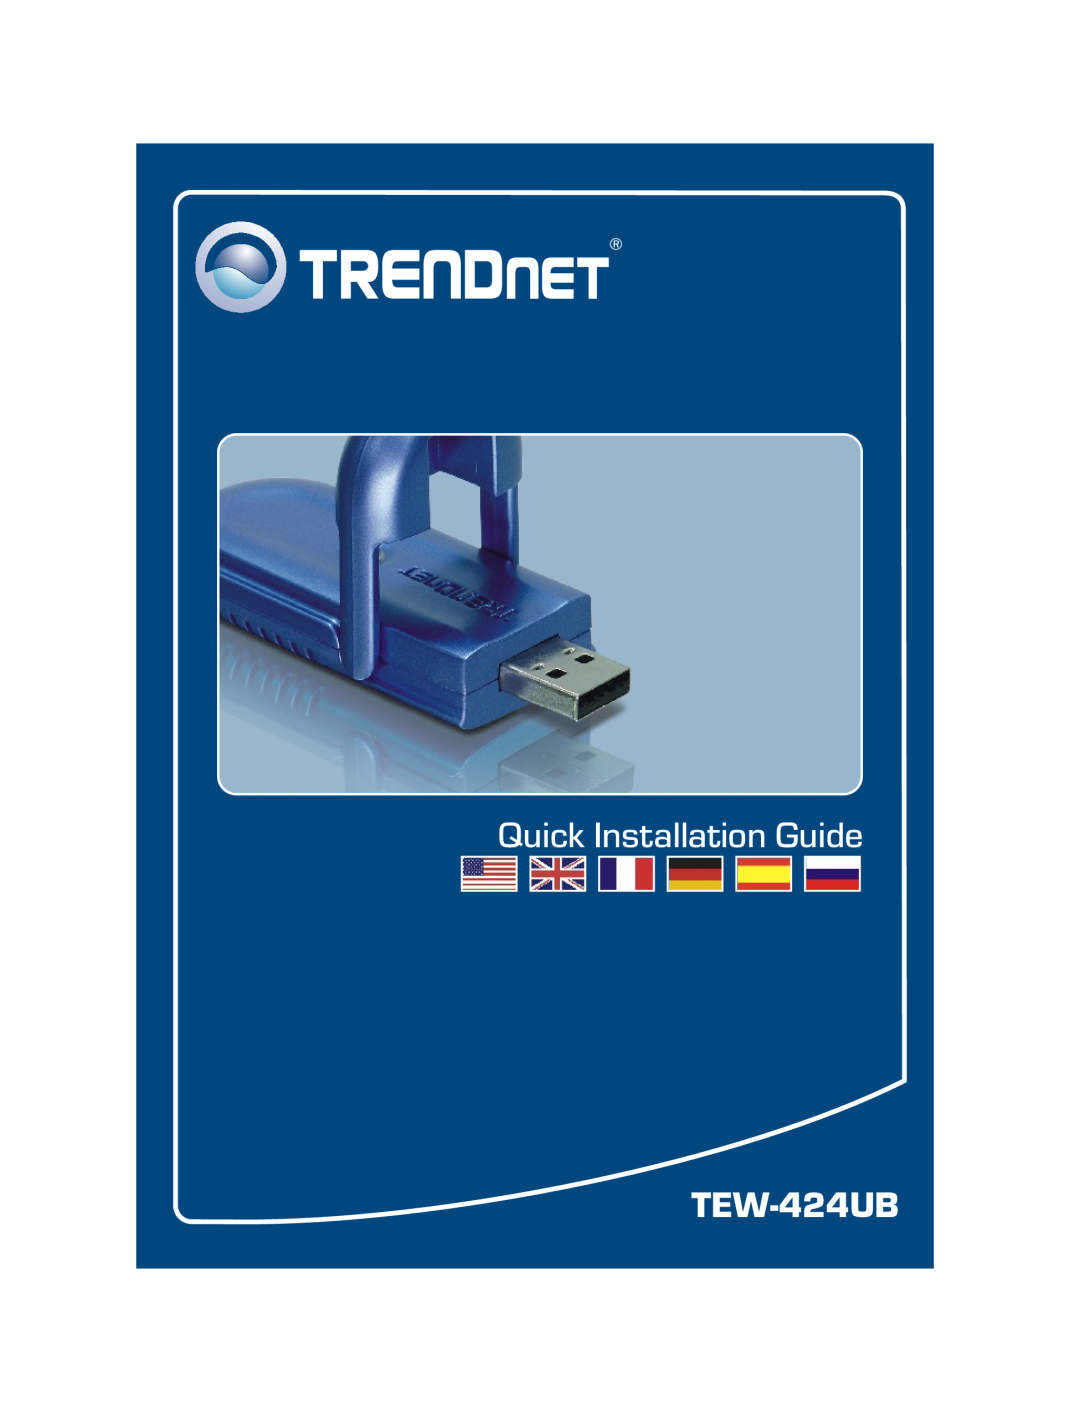 TRENDnet TEW-424UB manual Quick Installation Guide 